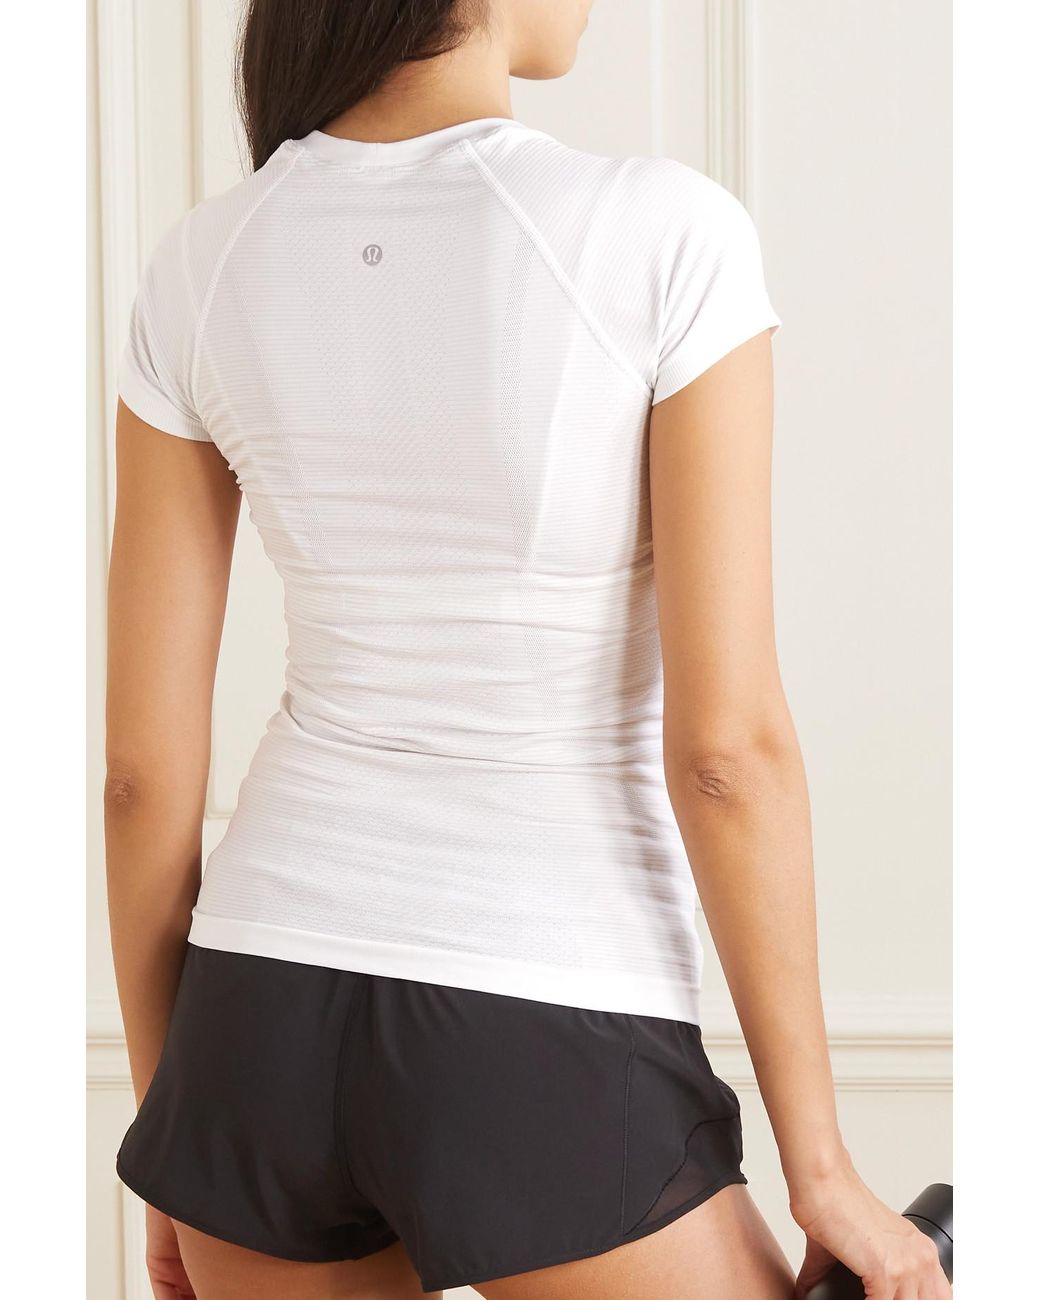 https://cdna.lystit.com/1040/1300/n/photos/net-a-porter/70501f67/lululemon-athletica-designer-White-Swiftly-Tech-20-Striped-Stretch-T-shirt.jpeg